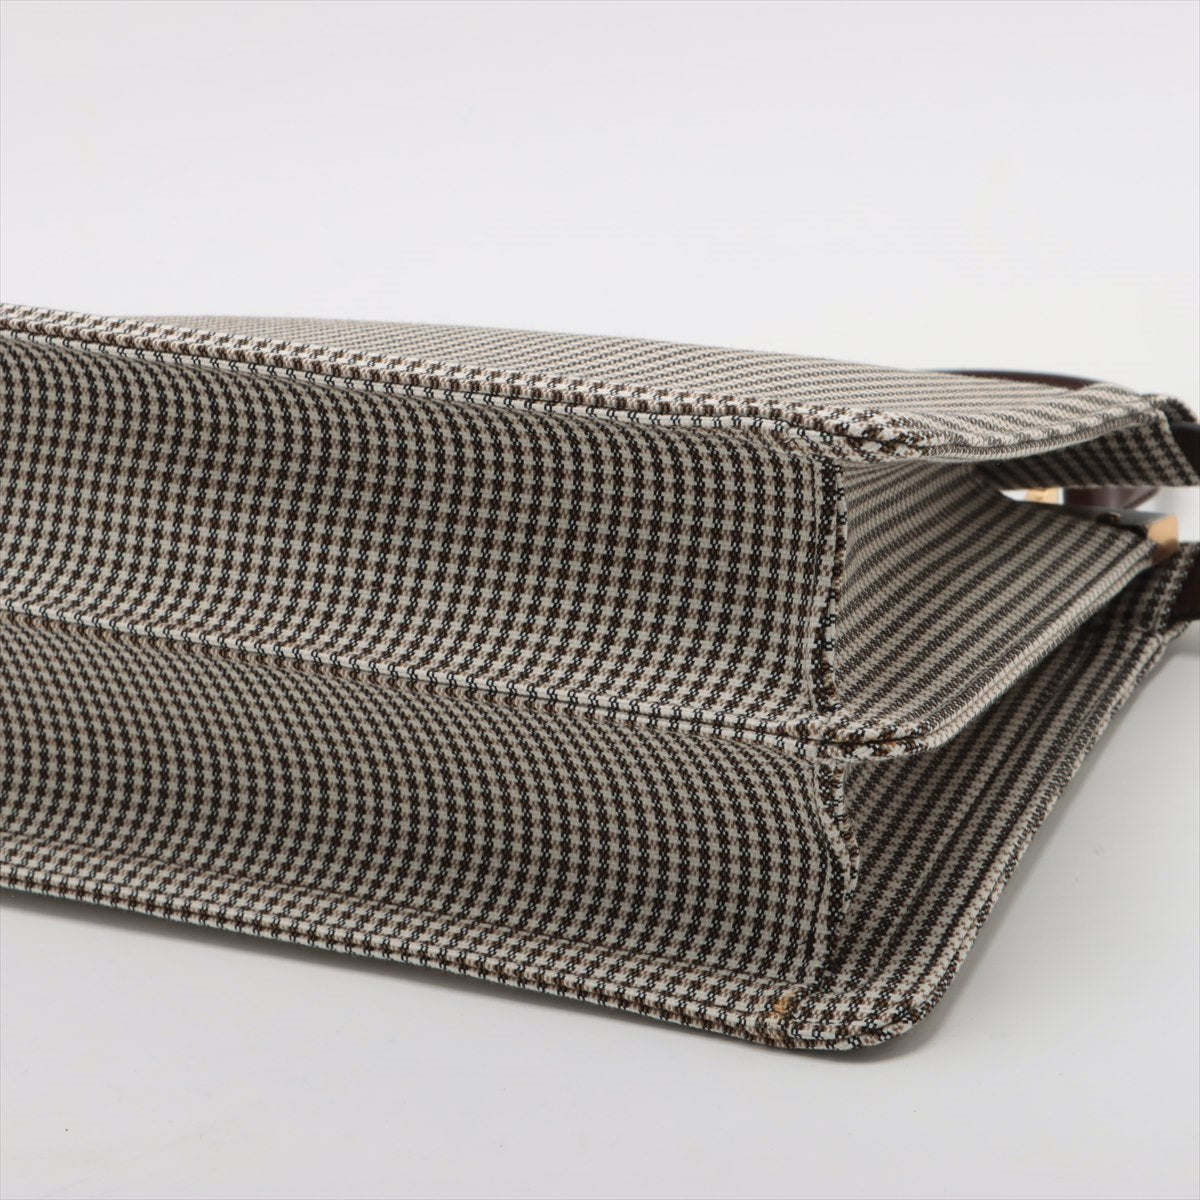 Fendi Peek-a-boo ICU Co., Ltd. Medium Canvas & Leather 2 Way Handbag Beige×Brown 8BN321